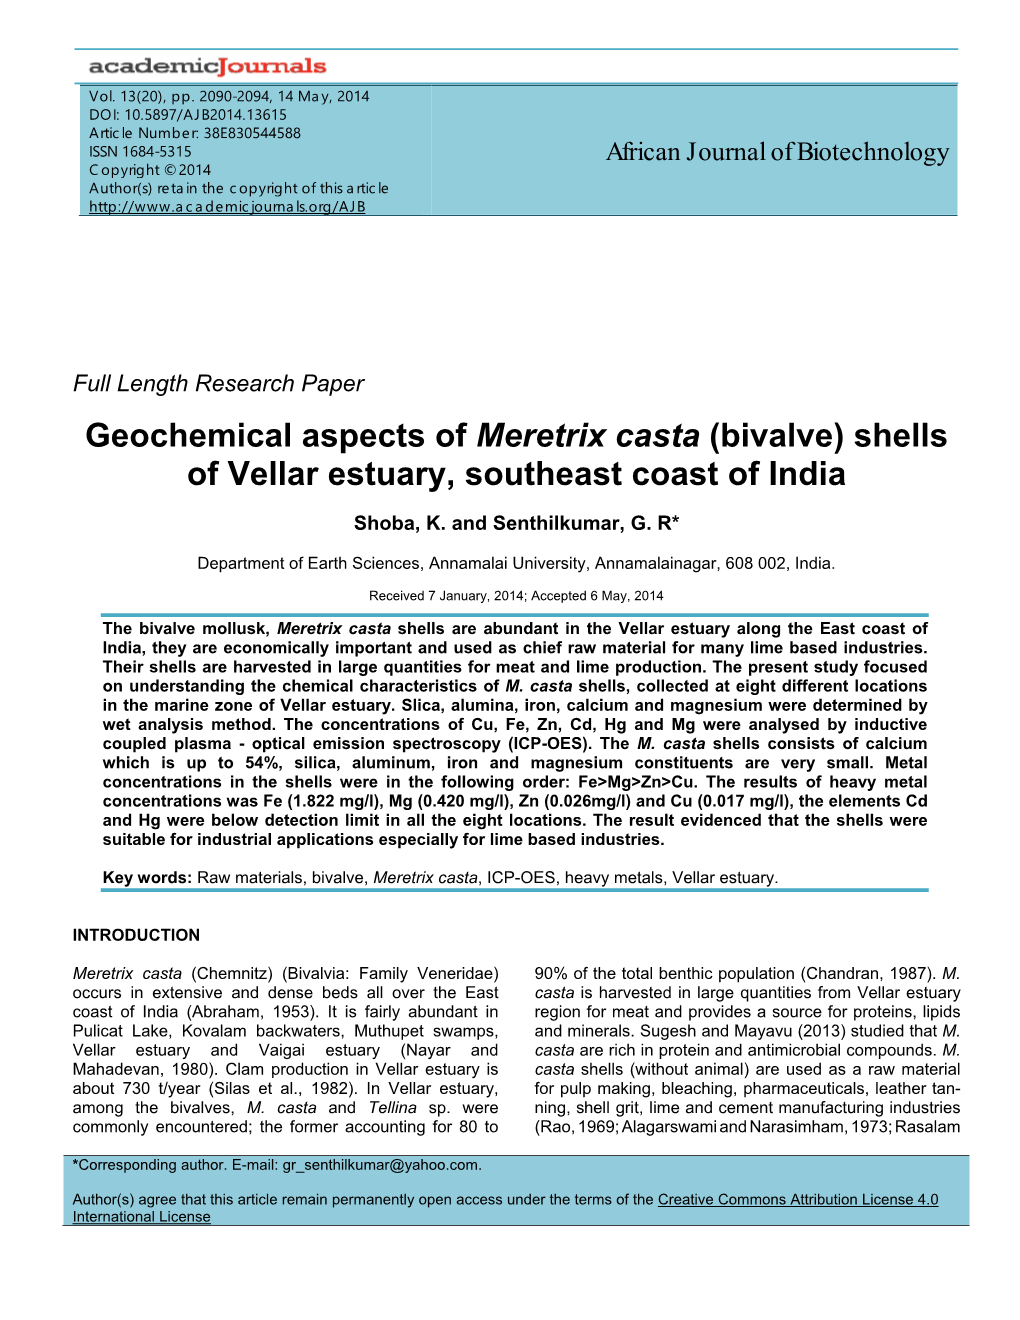 Geochemical Aspects of Meretrix Casta (Bivalve) Shells of Vellar Estuary, Southeast Coast of India